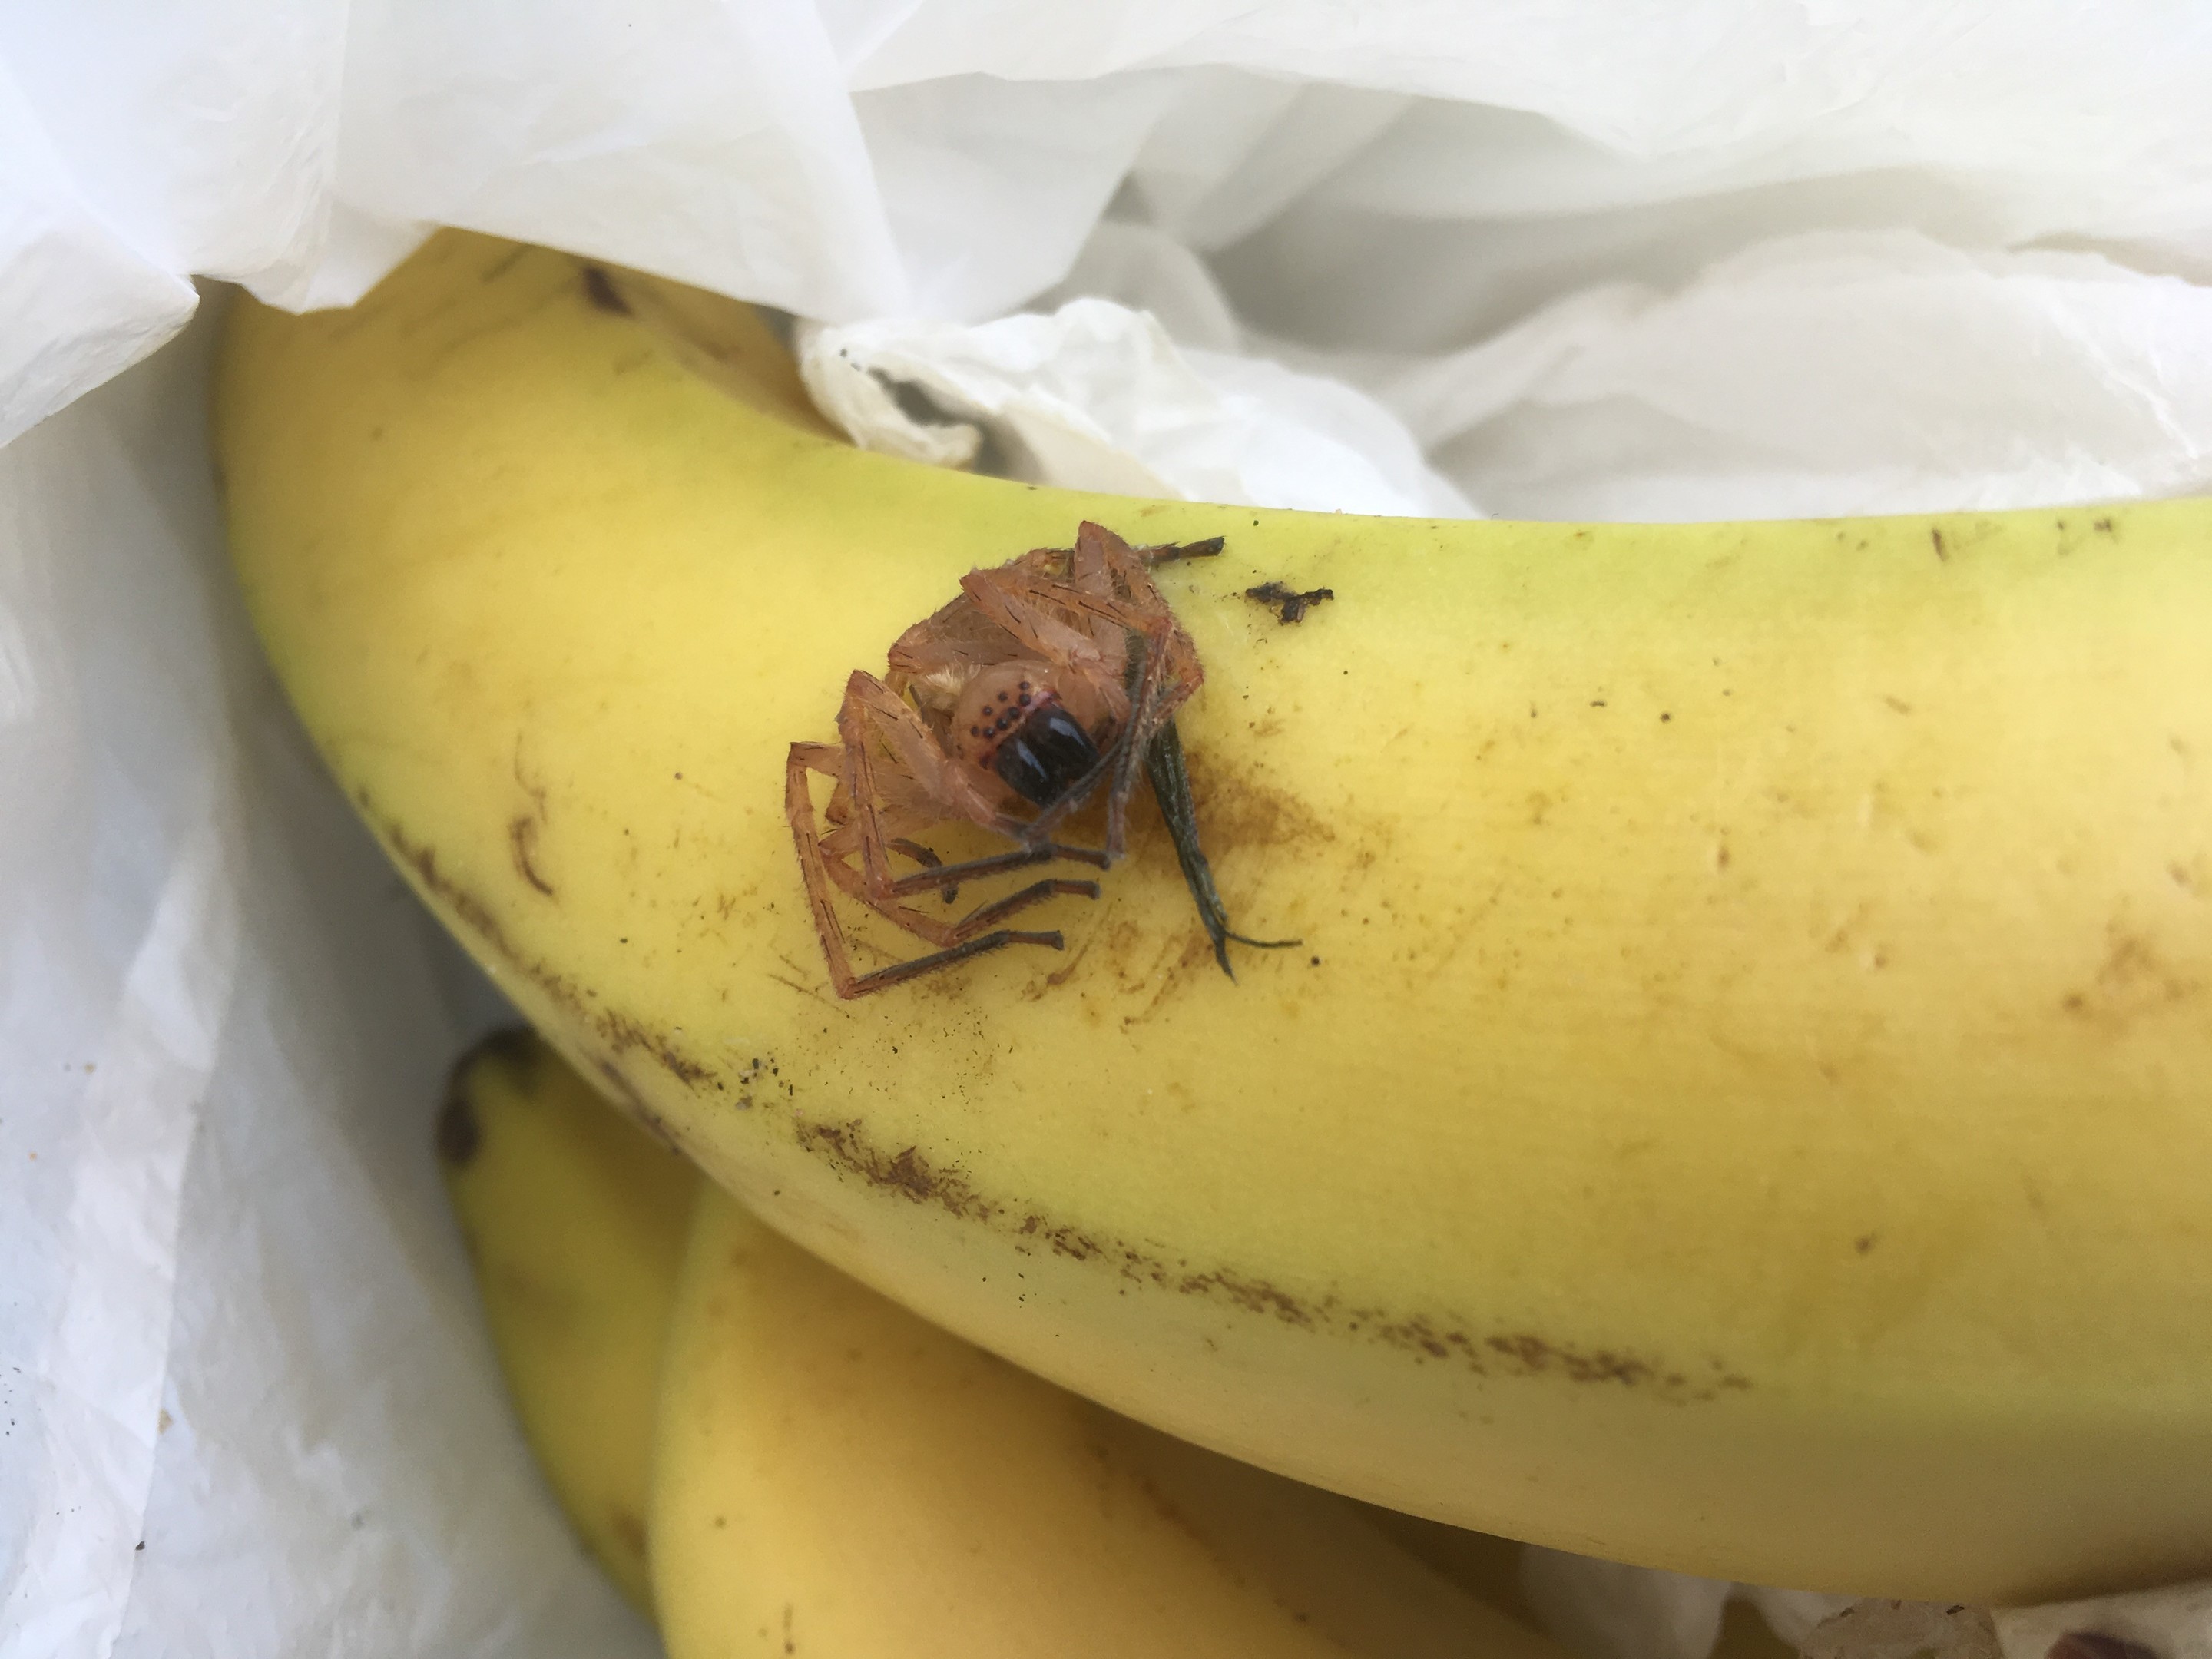 The spider found in the Aldi bananas.